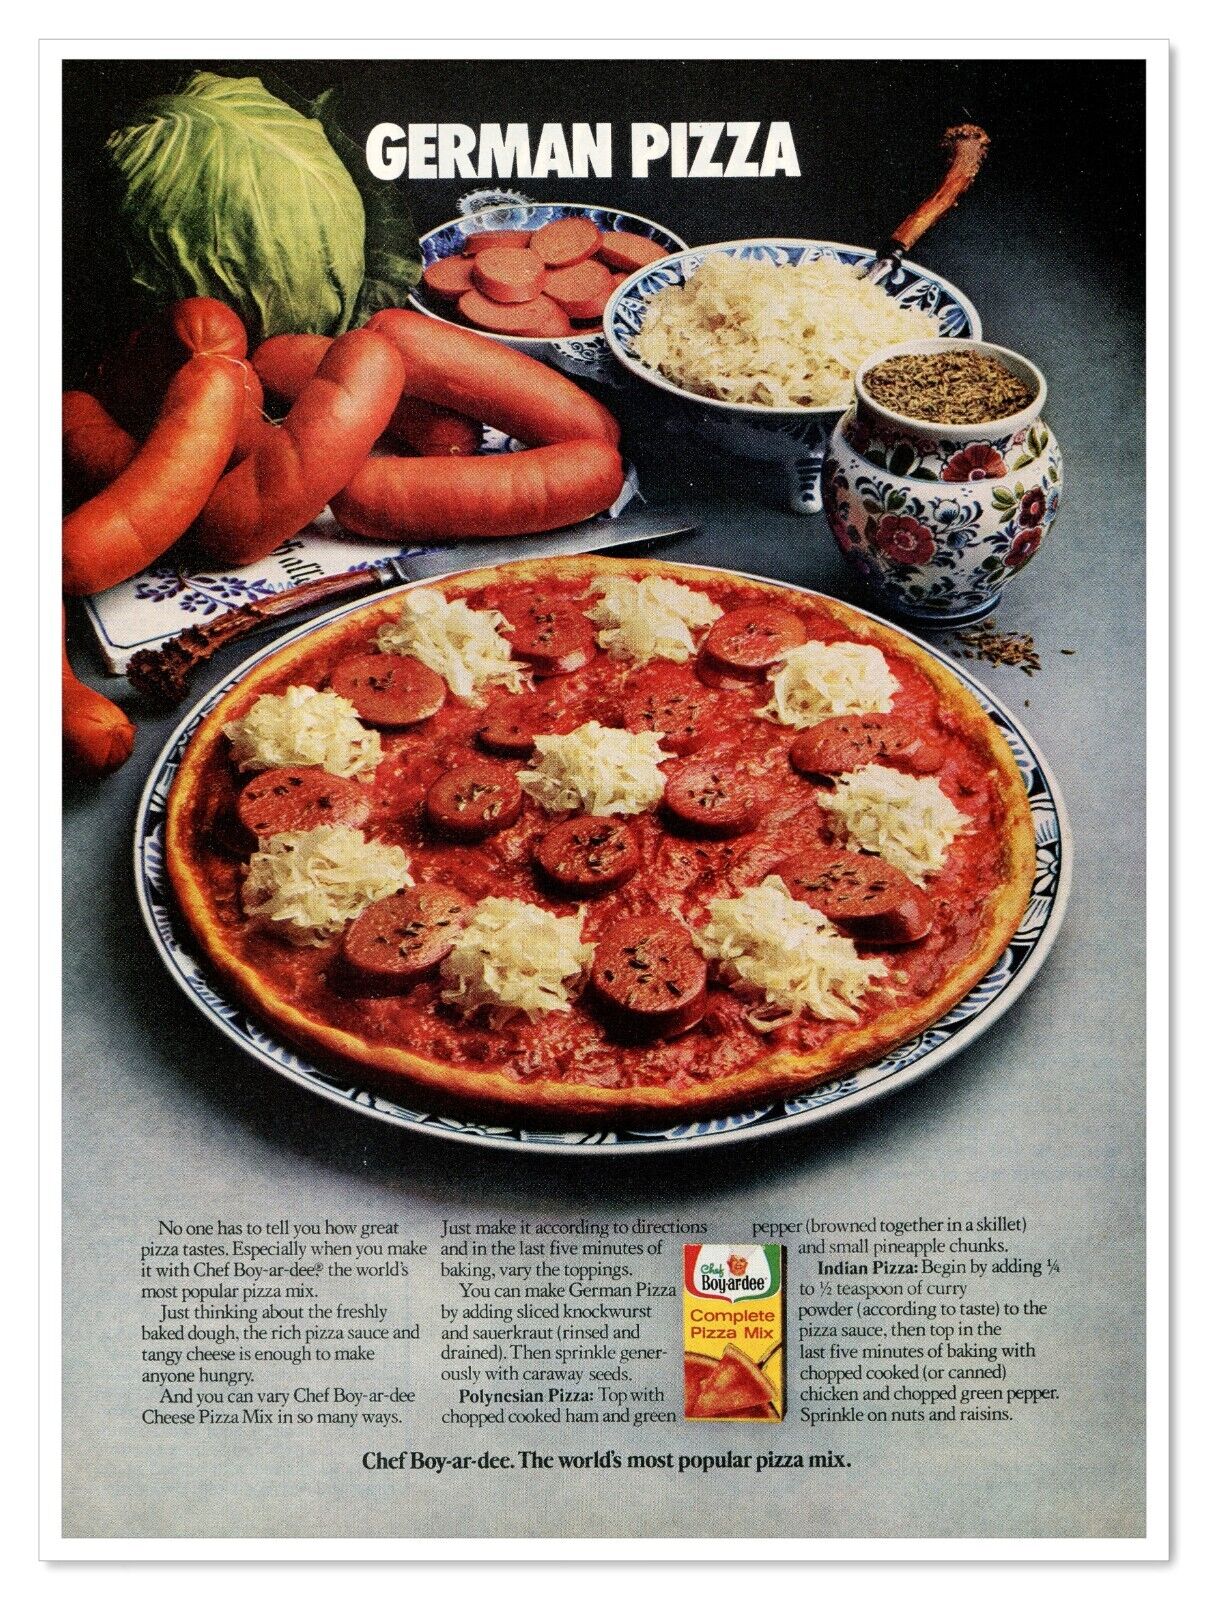 Chef Boy-ar-dee Pizza Mix Recipe Ideas Vintage 1972 Full-Page Magazine Ad